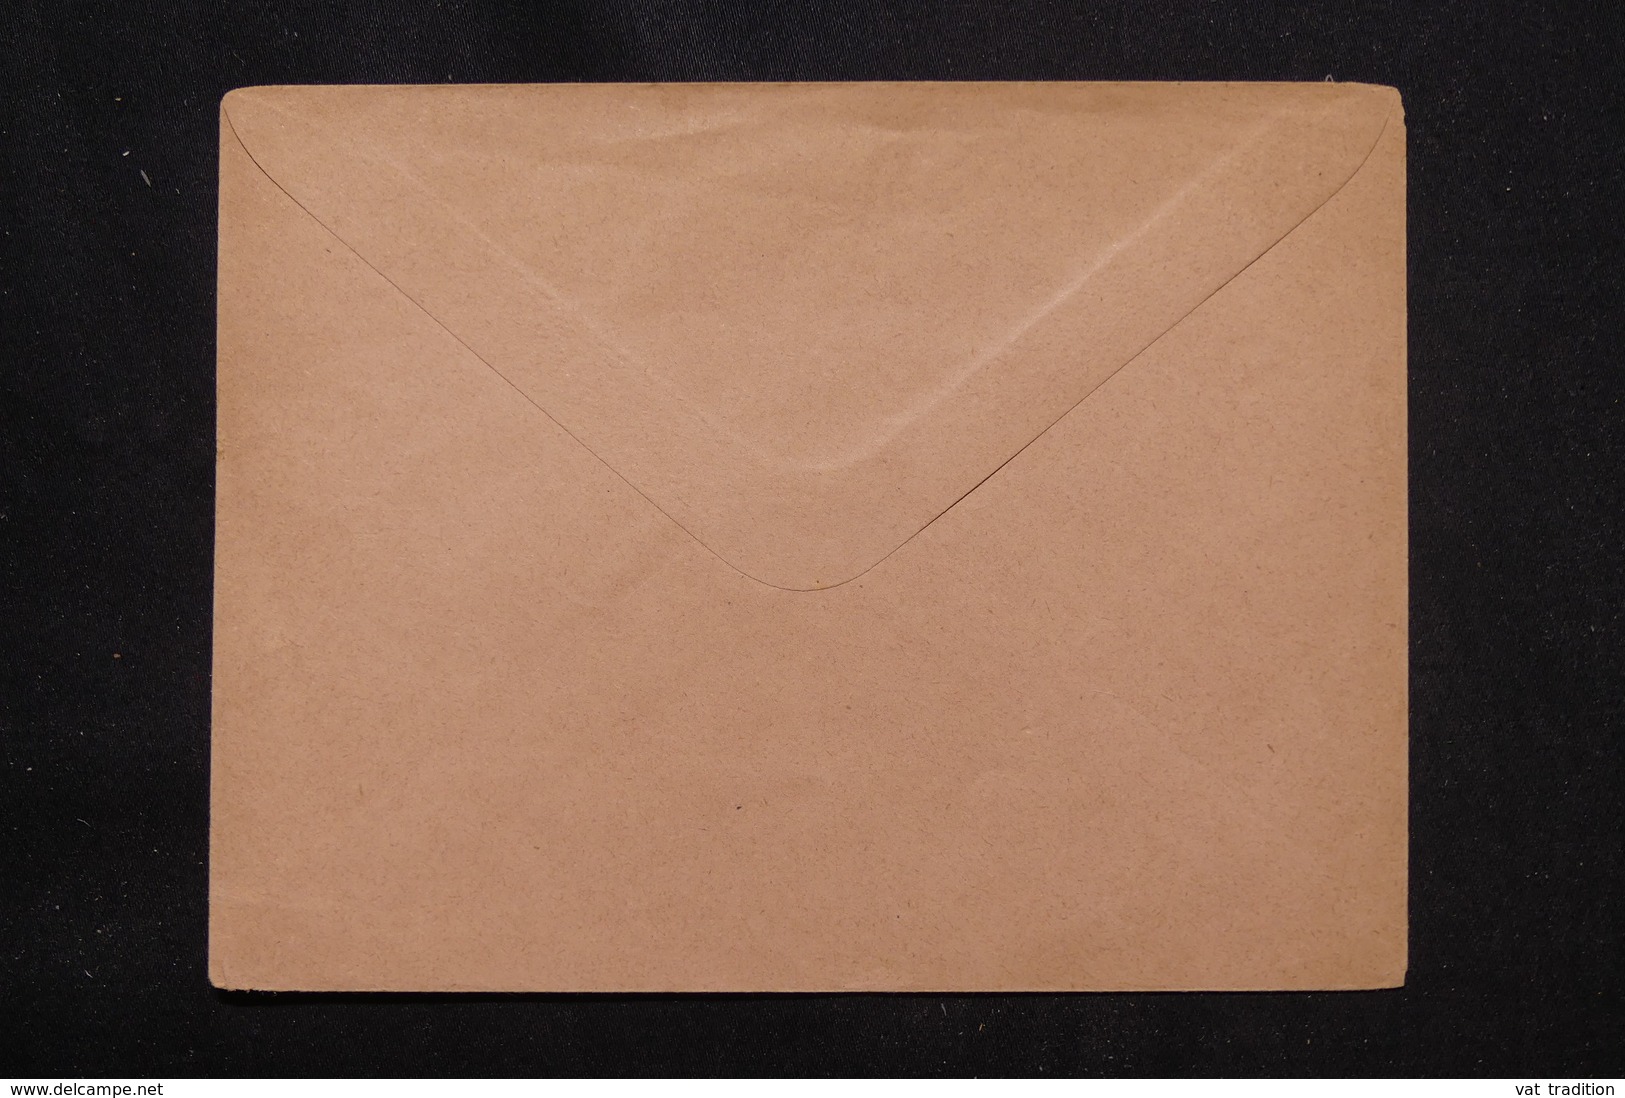 GRANDE COMORE - Entier Postal Type Groupe Non Circulé - L 59321 - Lettres & Documents